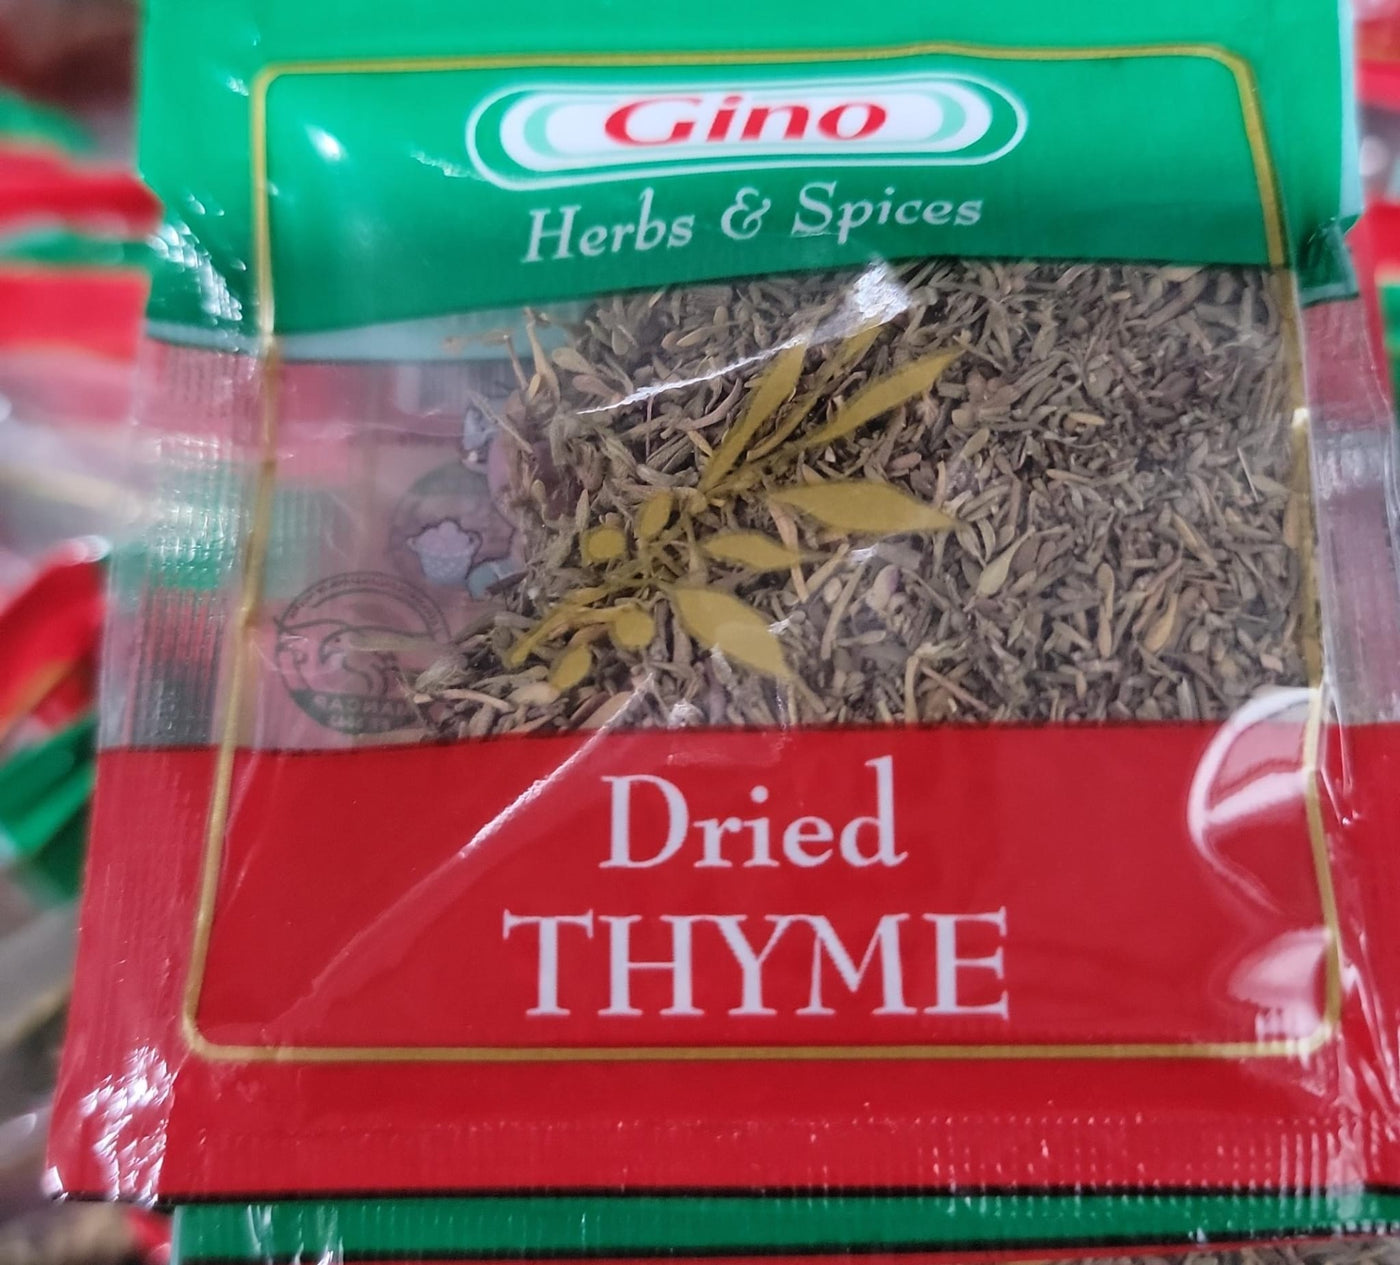 Gino Dried Thyme